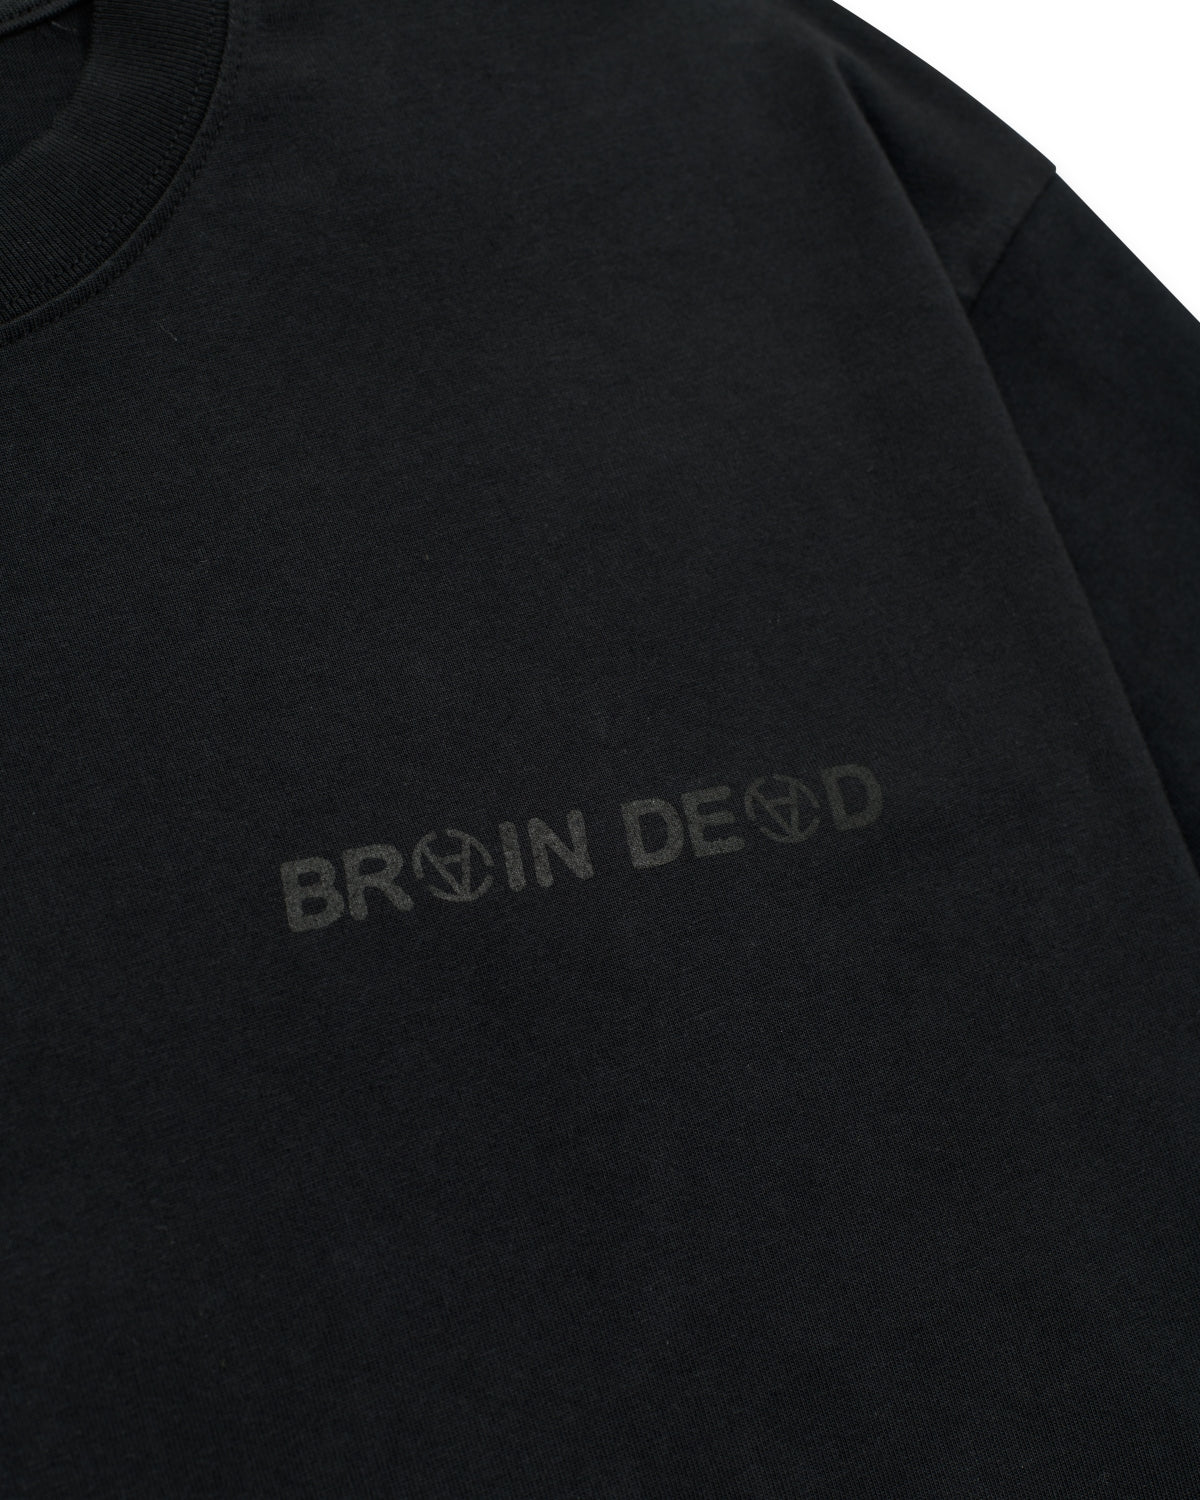 Brain Dead x Slam Jam Digi Anarchy T-Shirt - Black